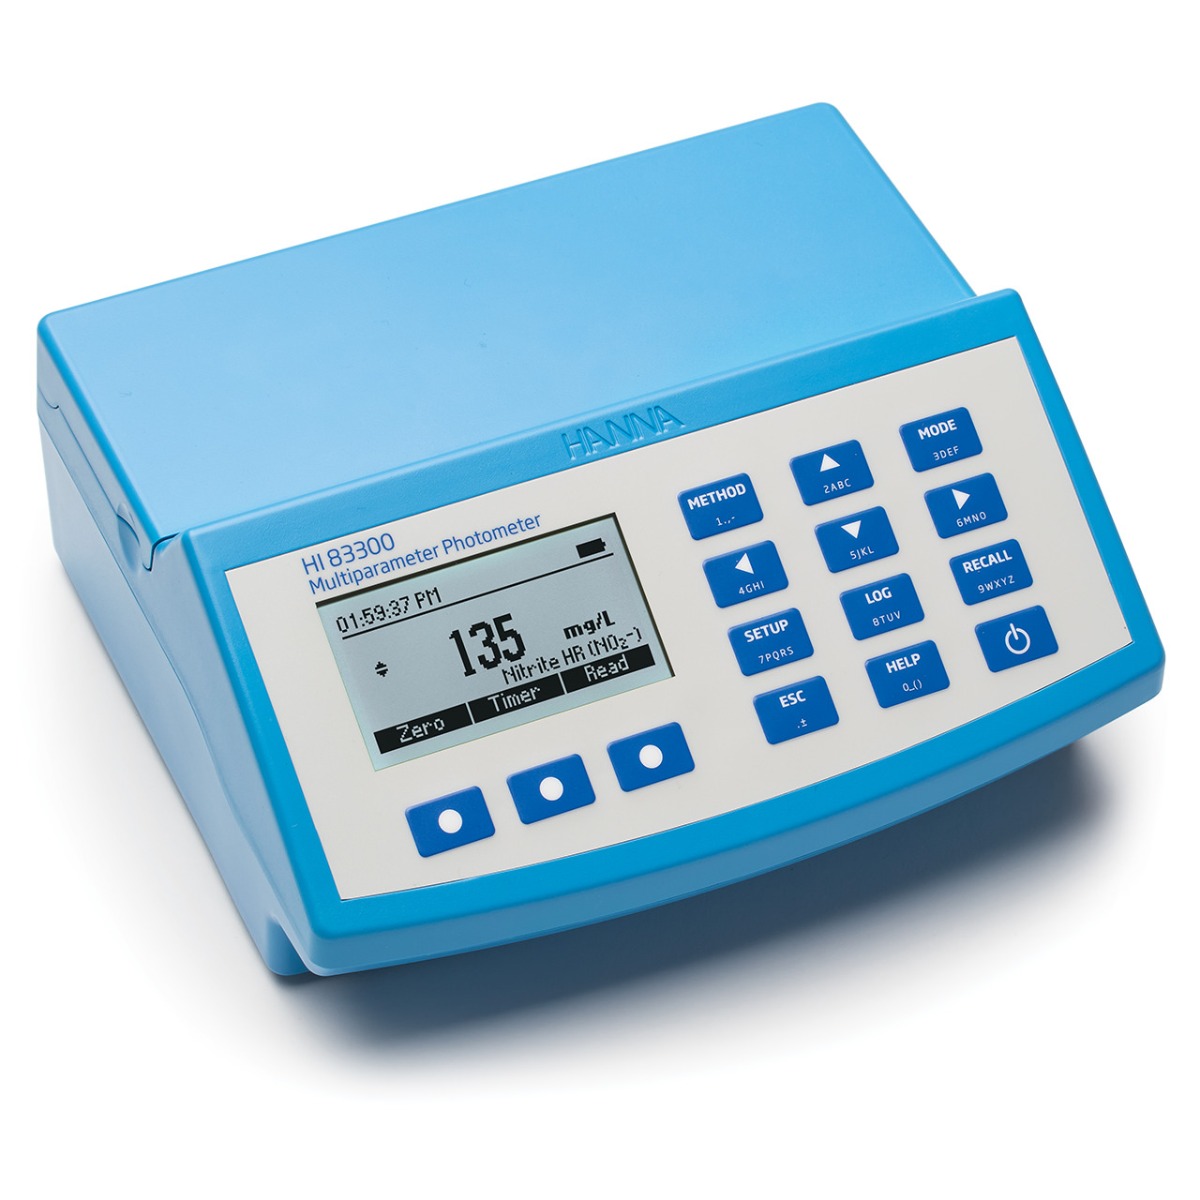 HI83300 Advanced Multiparameter Benchtop Photometer and pH meter